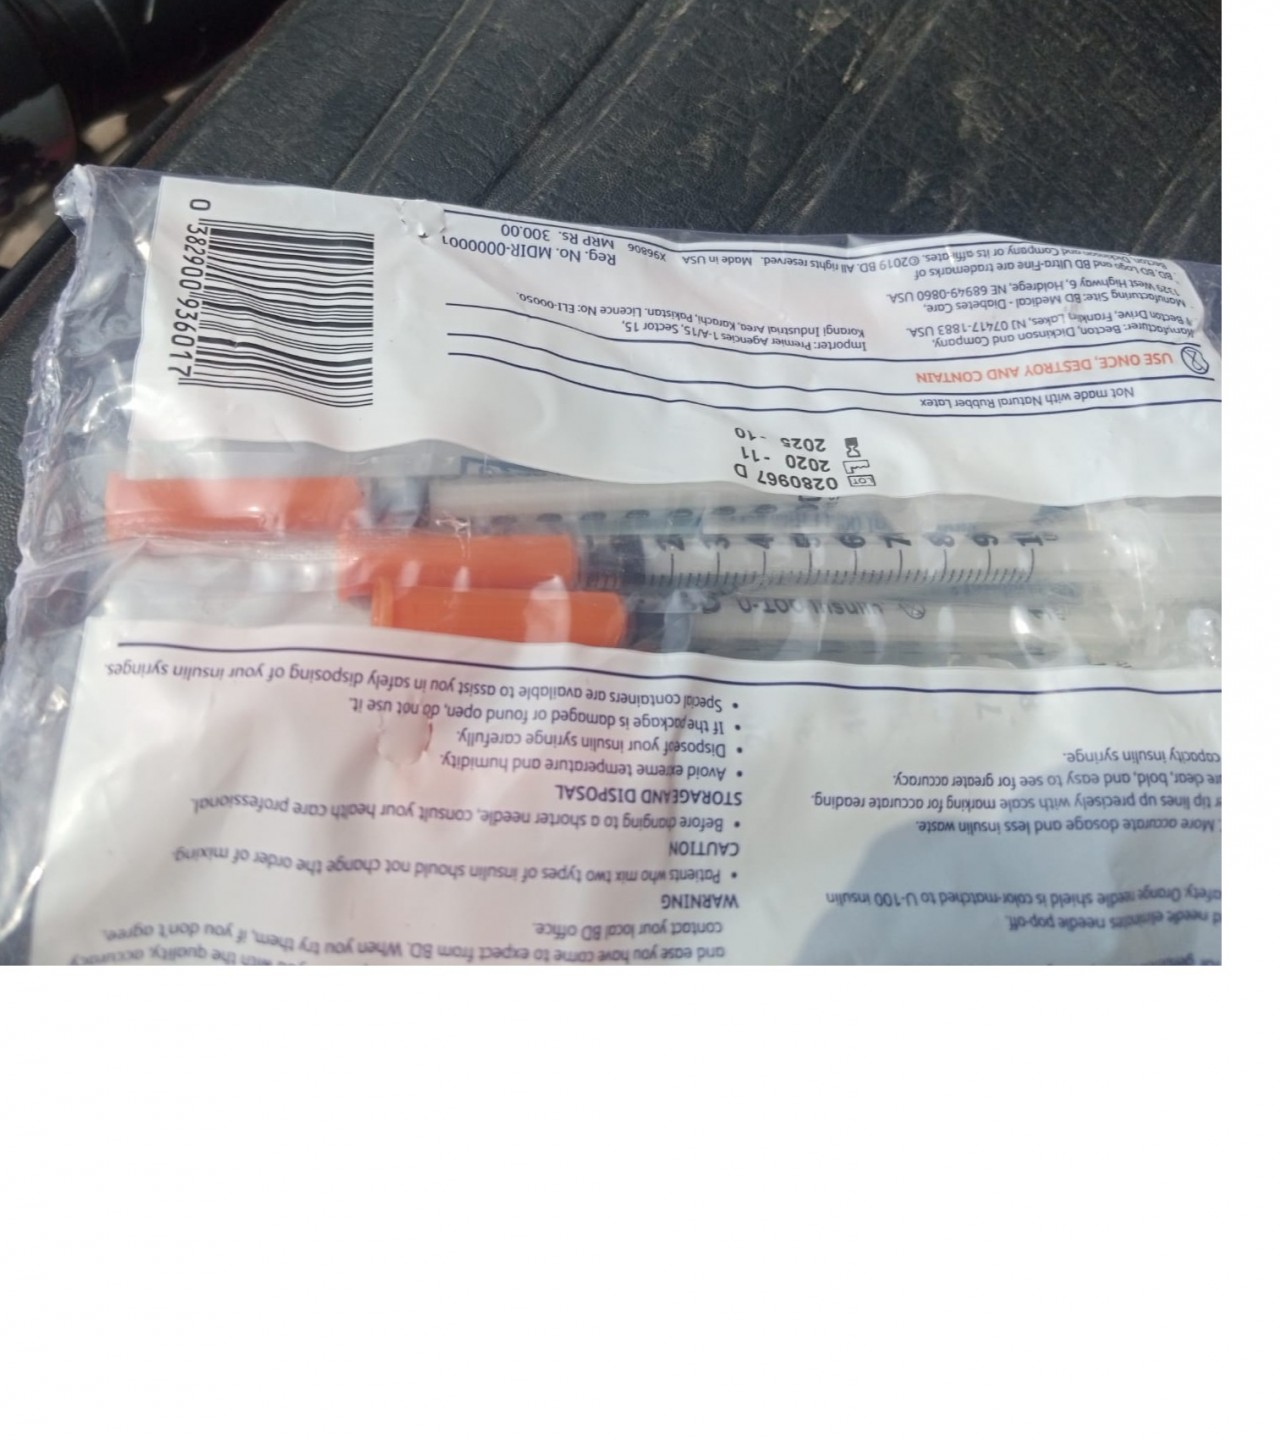 Pack of 10 -BD Ultra-Fine Insulin Syringes